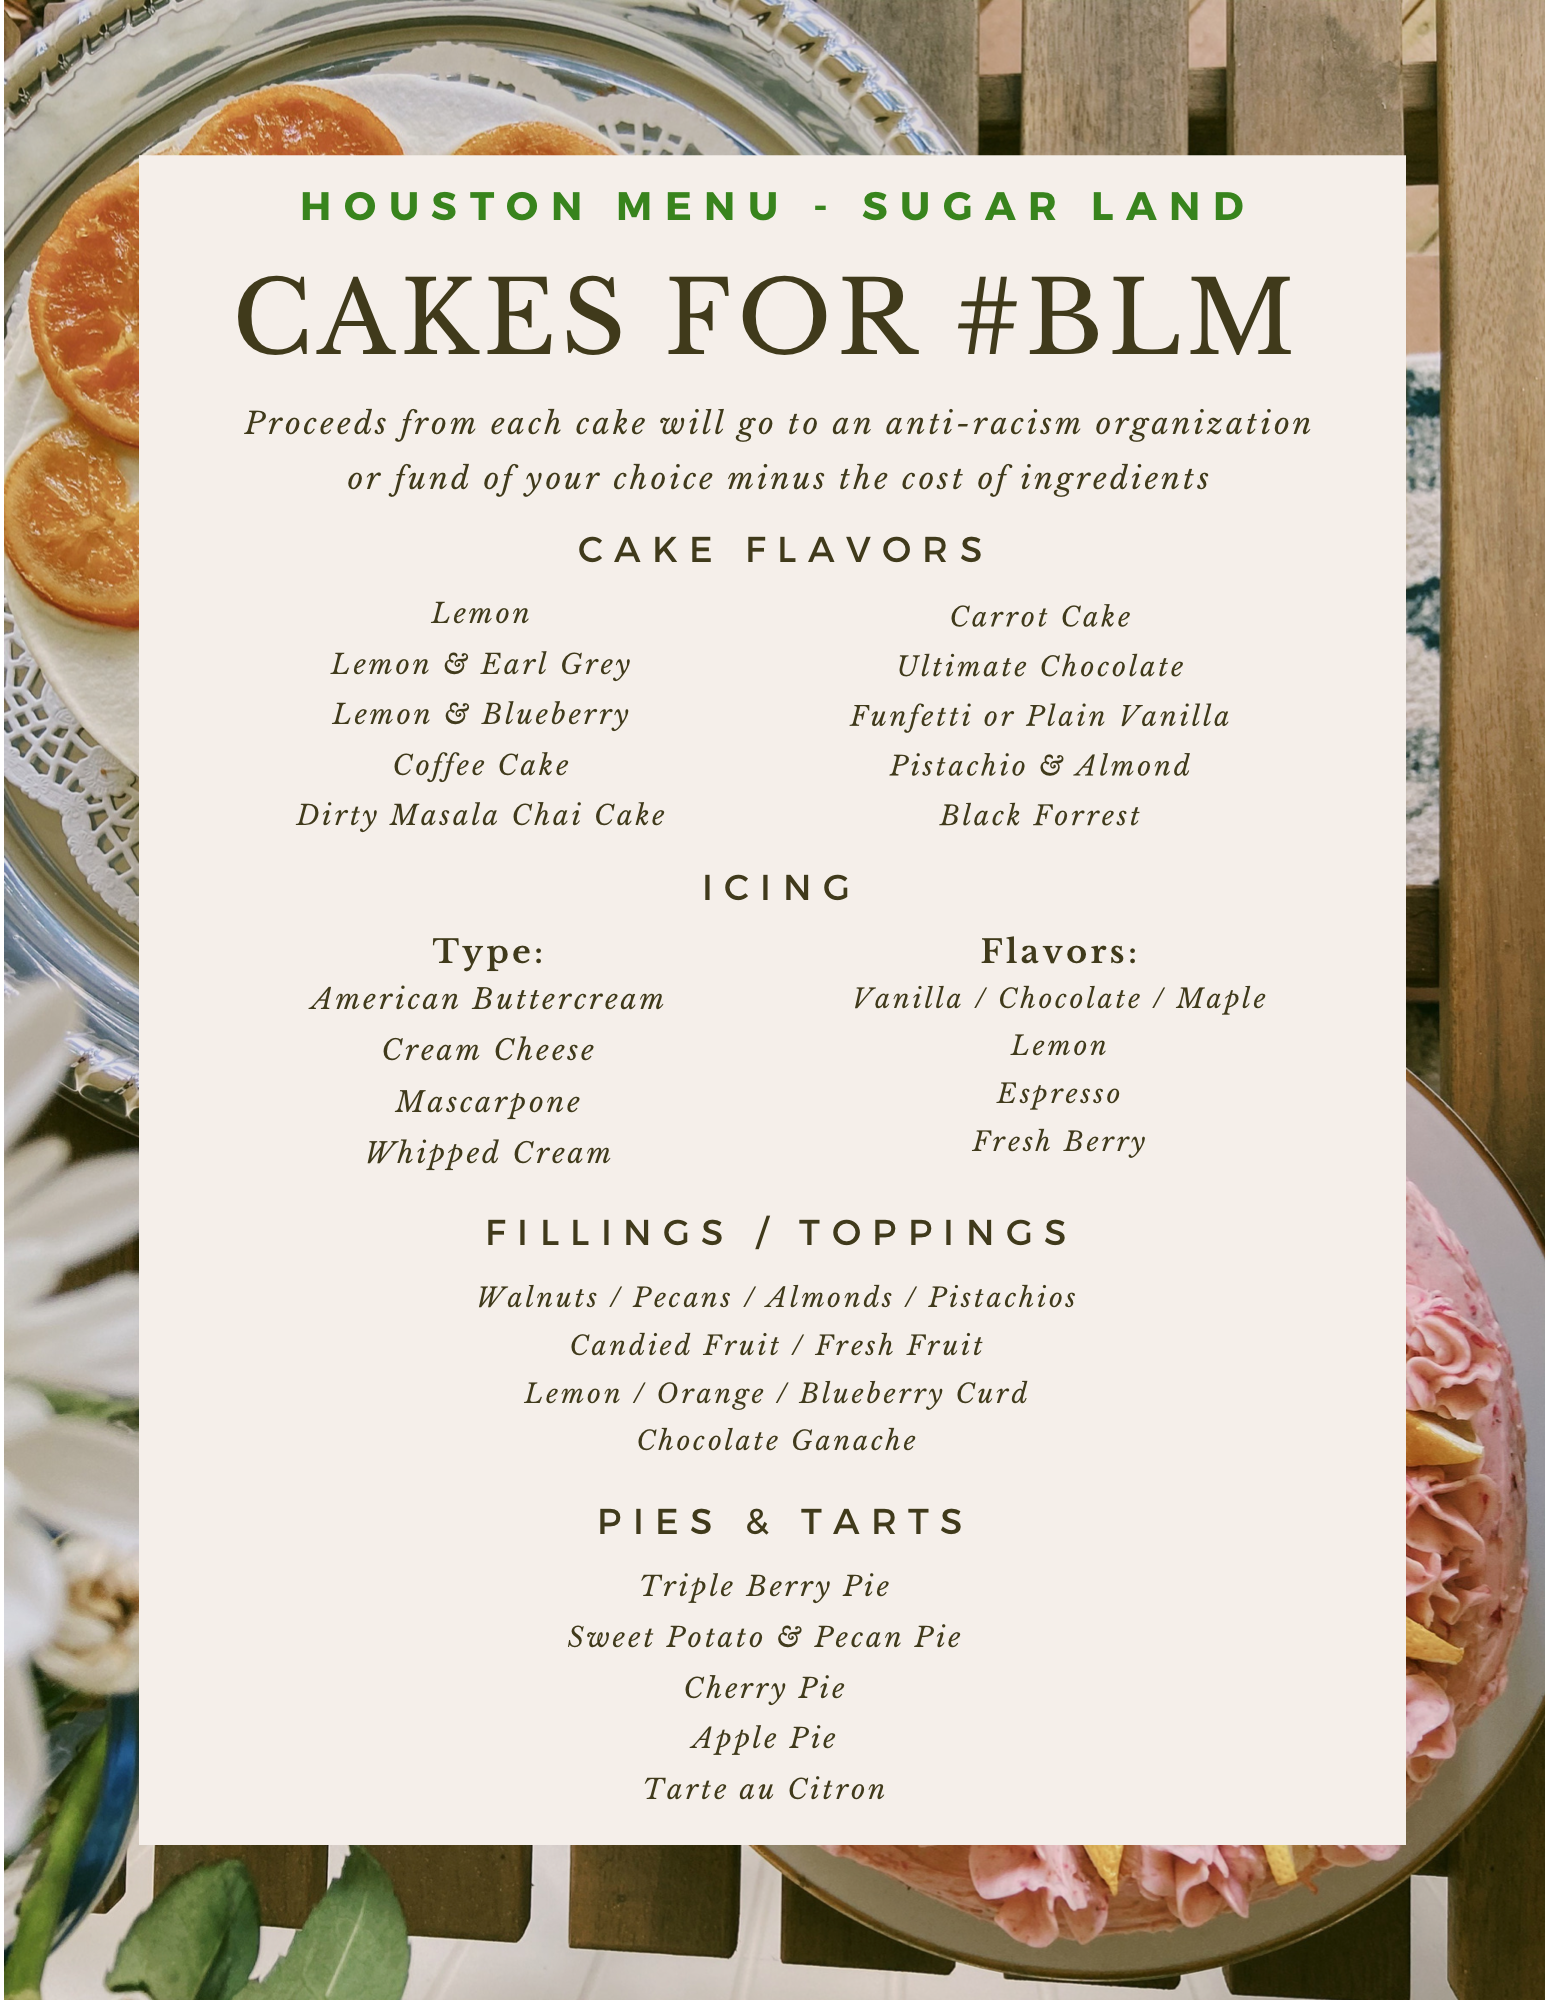 Cakes for BLM - Houston, Texas - Sugar Land menu